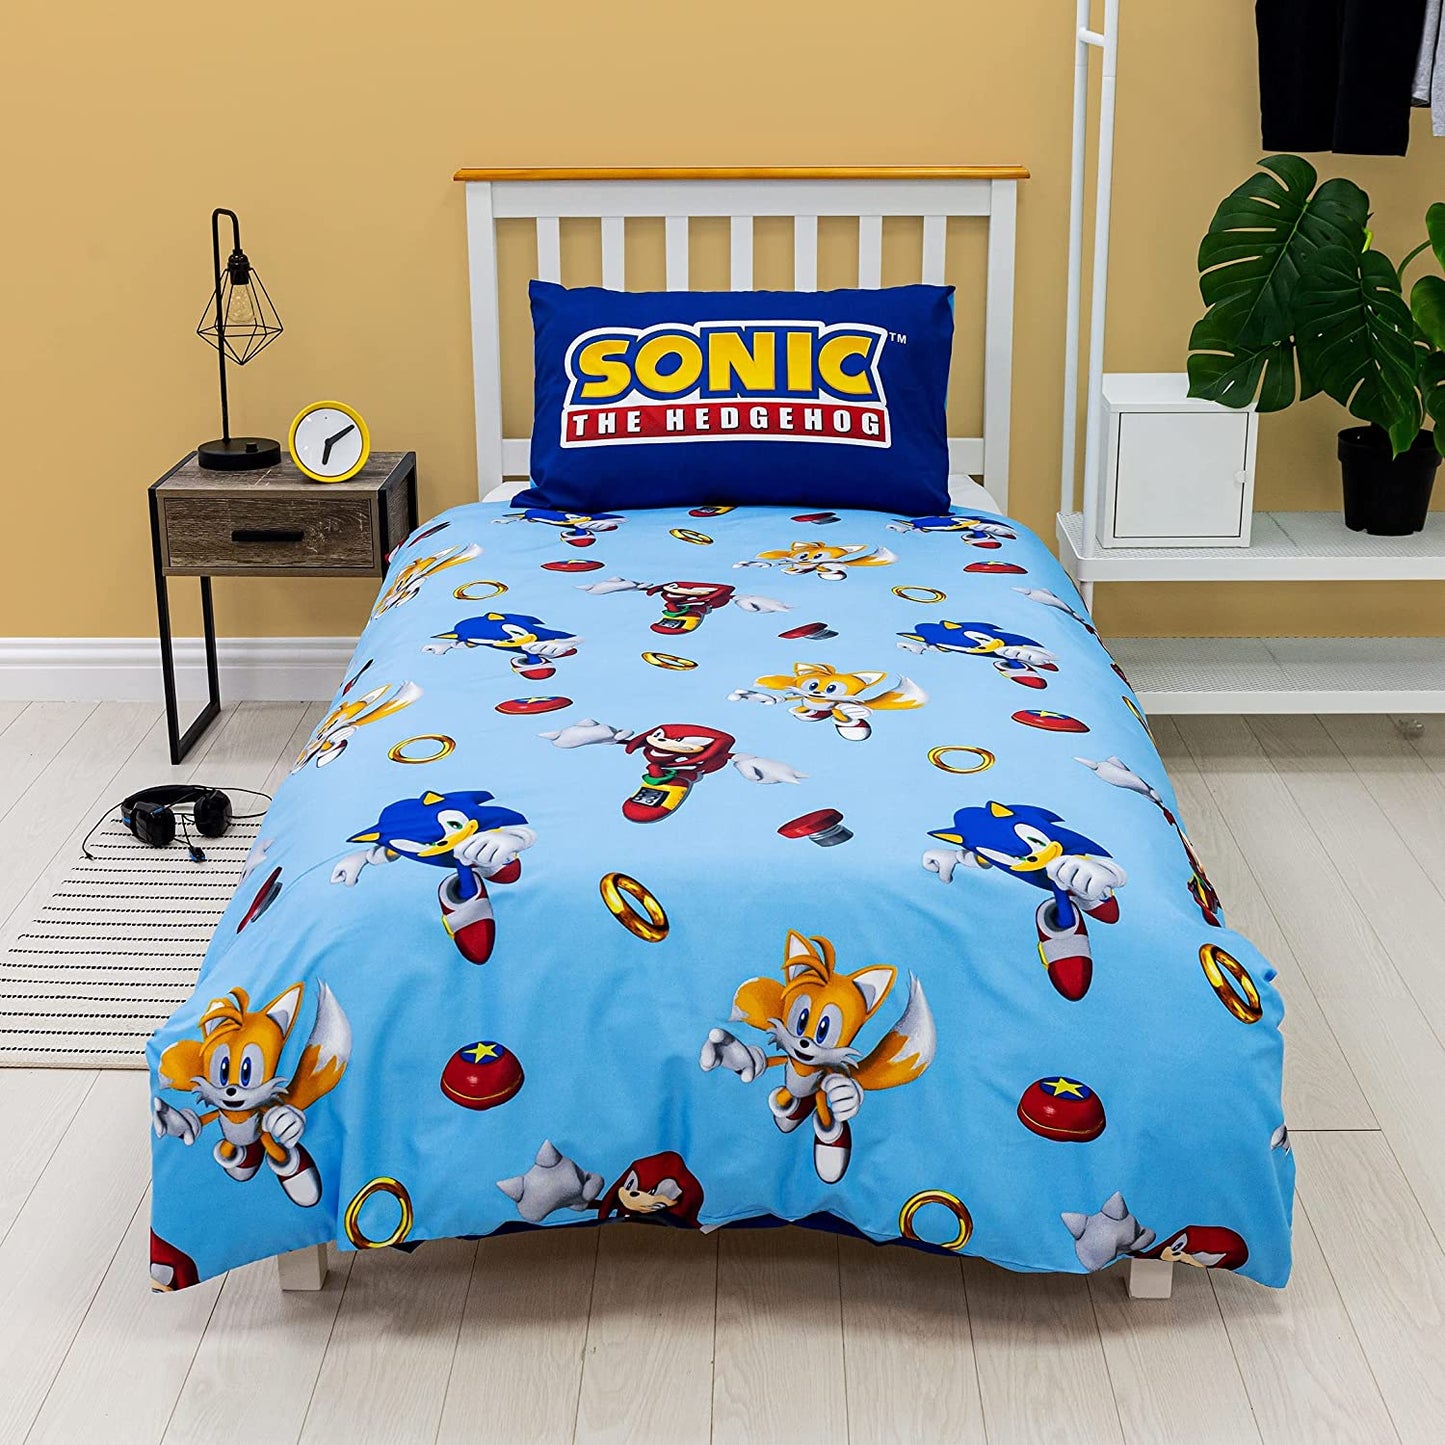 Single Bed Sonic The Hedgehog Duvet Cover Set